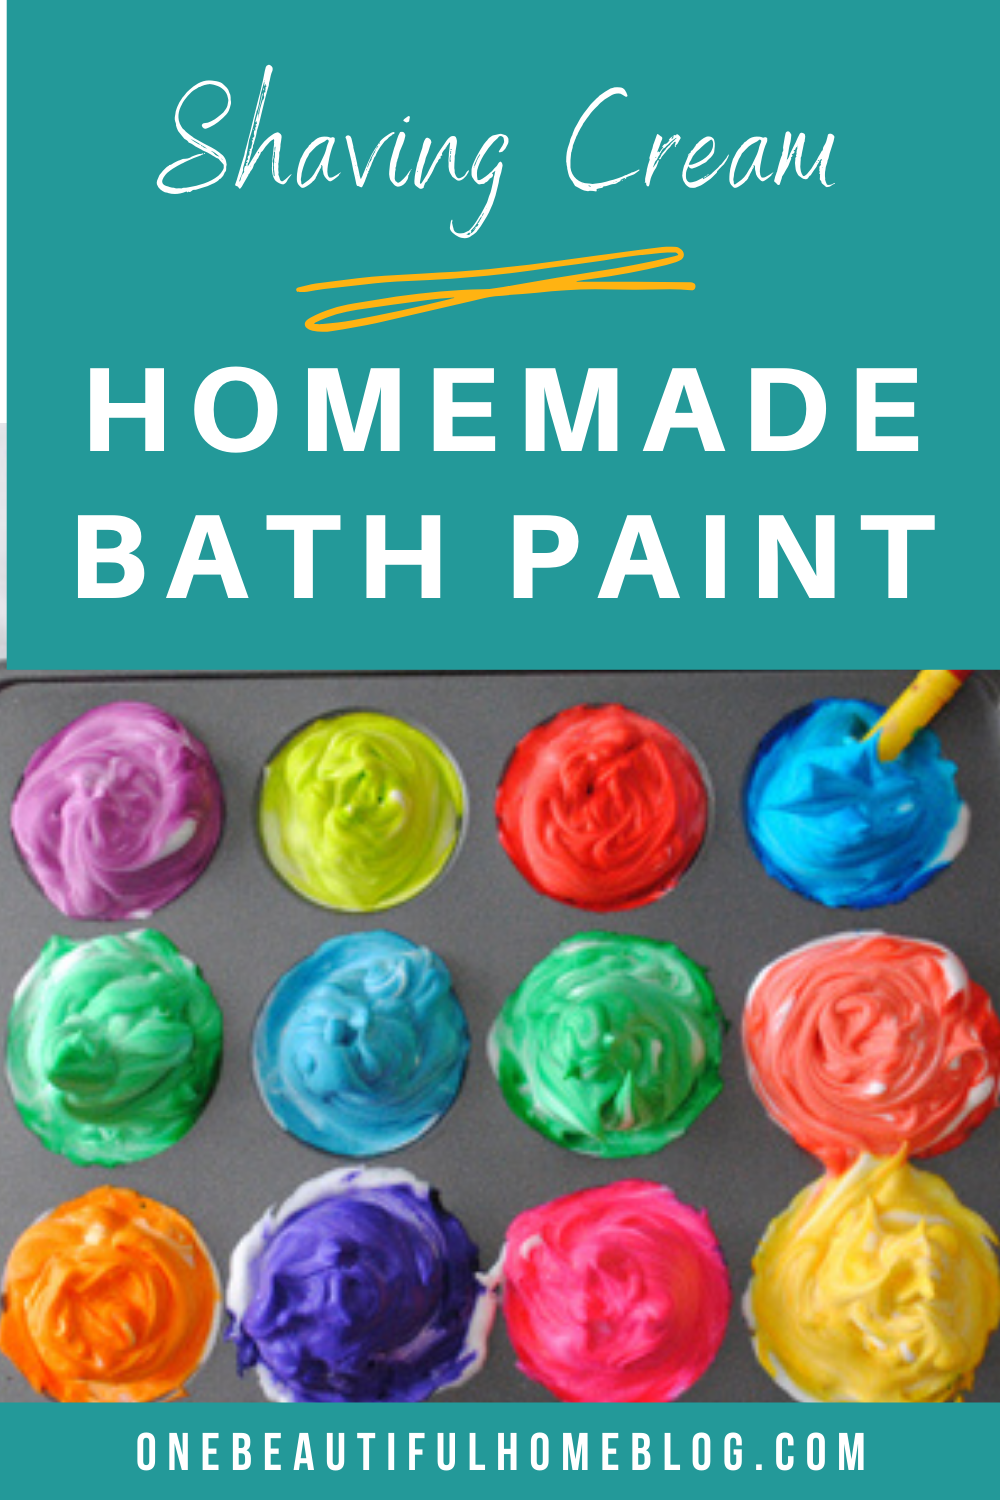 Homemade Bath Paint with Shaving Cream {So Easy!} - One Beautiful Home